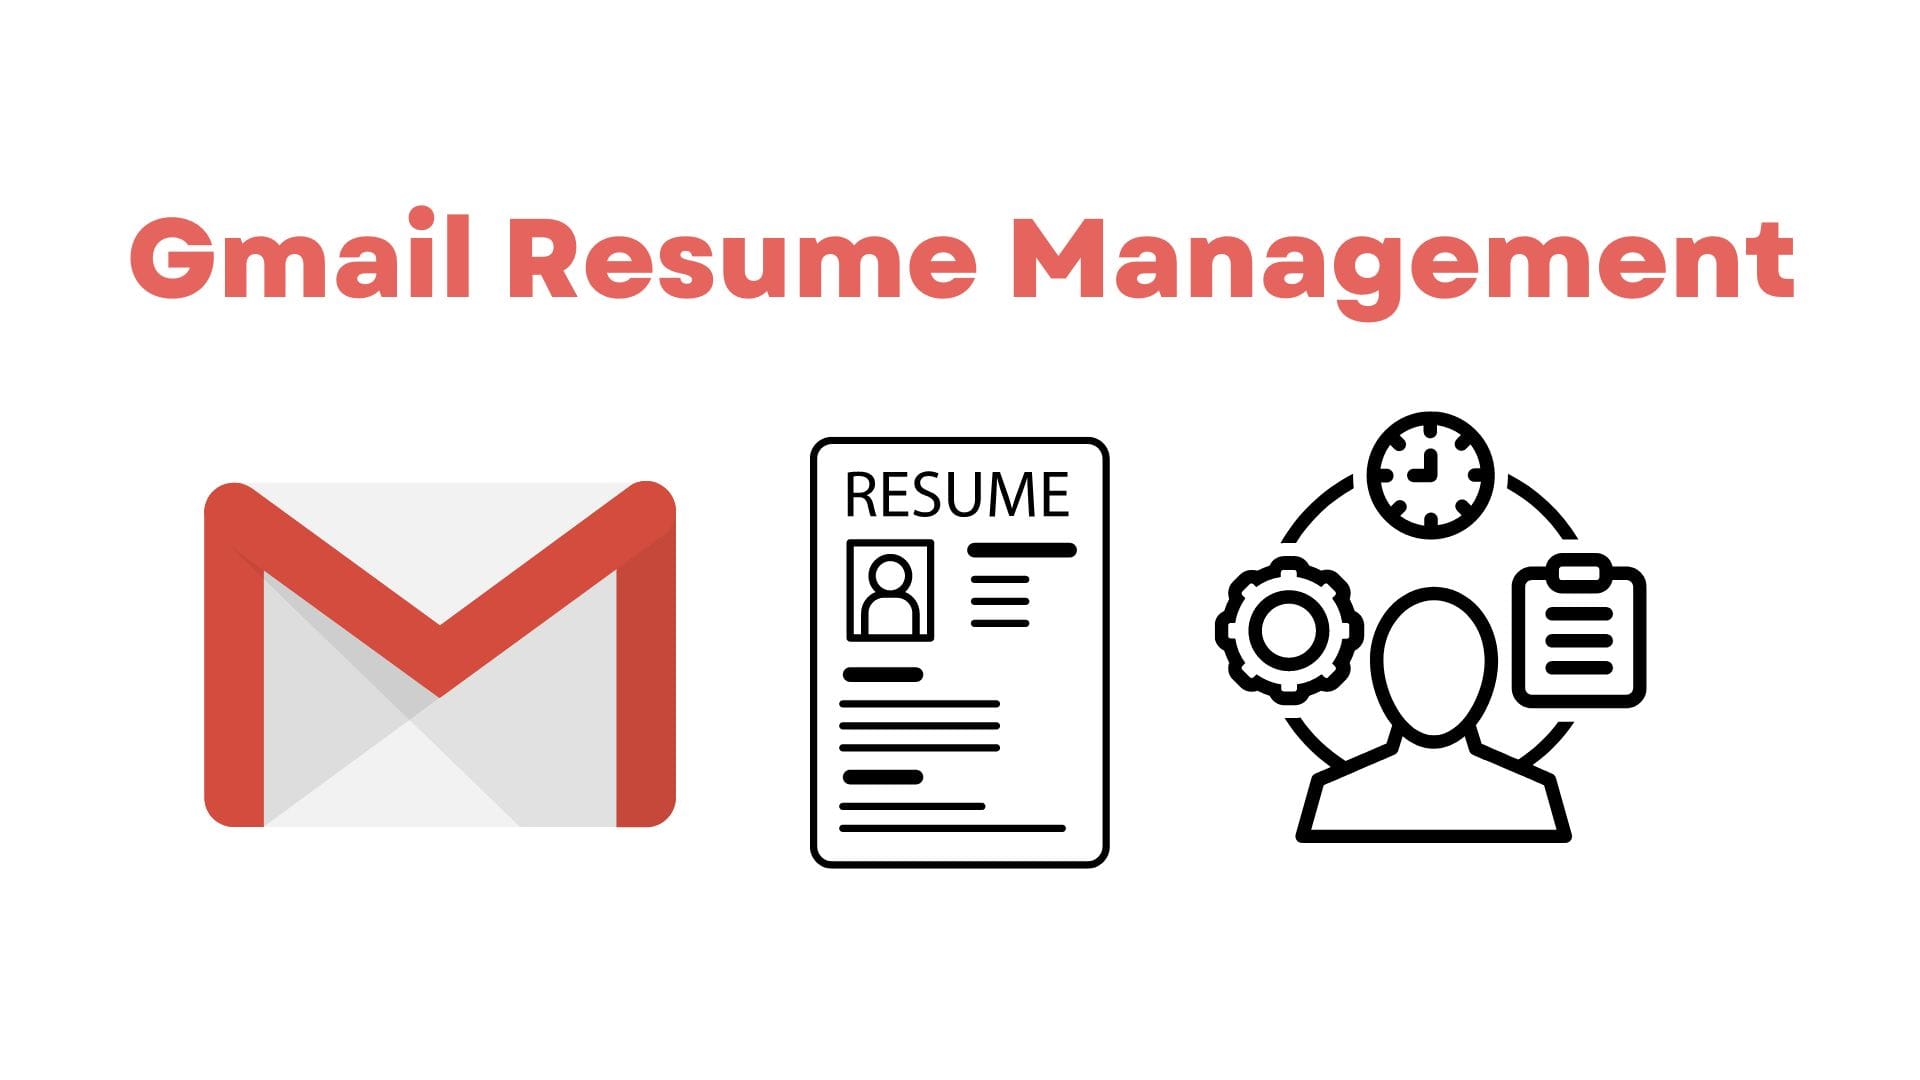 Gmail Resume Management